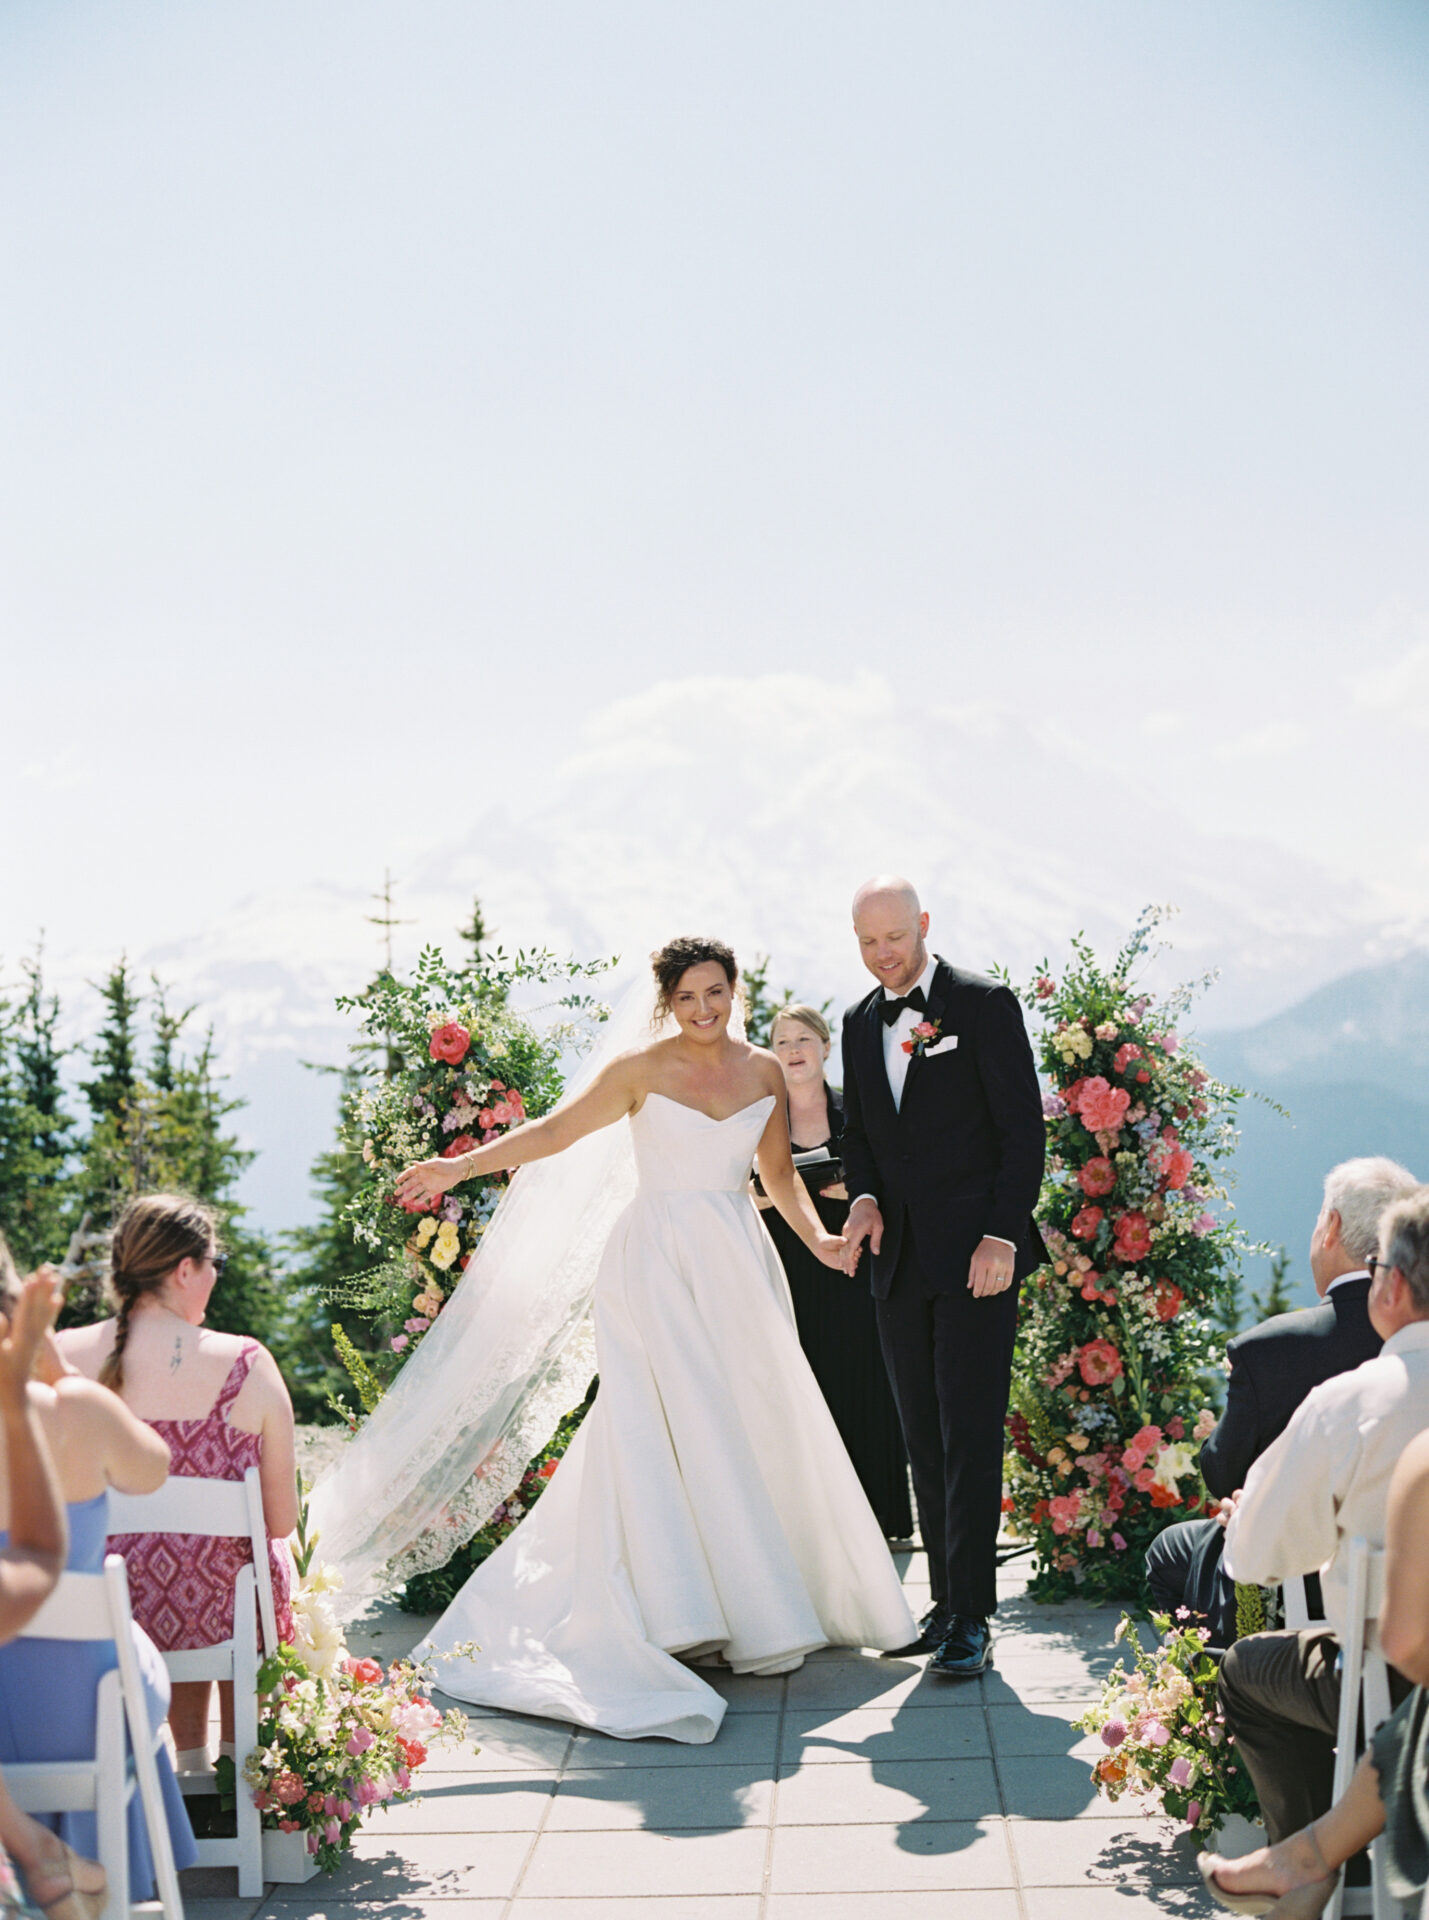 Crystal Mountain Resort Weddings